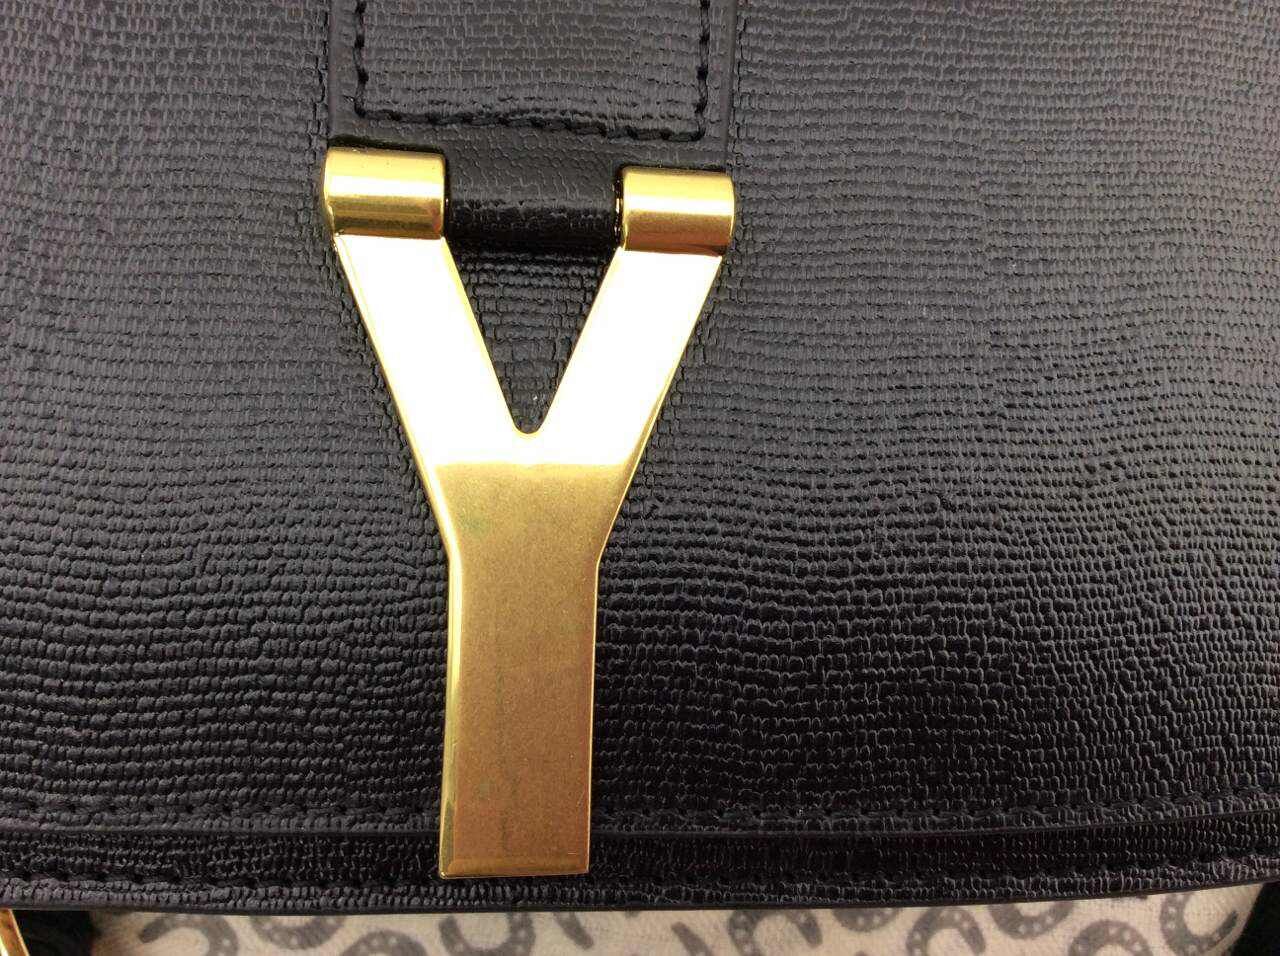 2015 New Saint Laurent Bag Cheap Sale-Saint Laurent Classic Medium Monogram UNIVERSITE BAG in Black Gained Leather - Click Image to Close